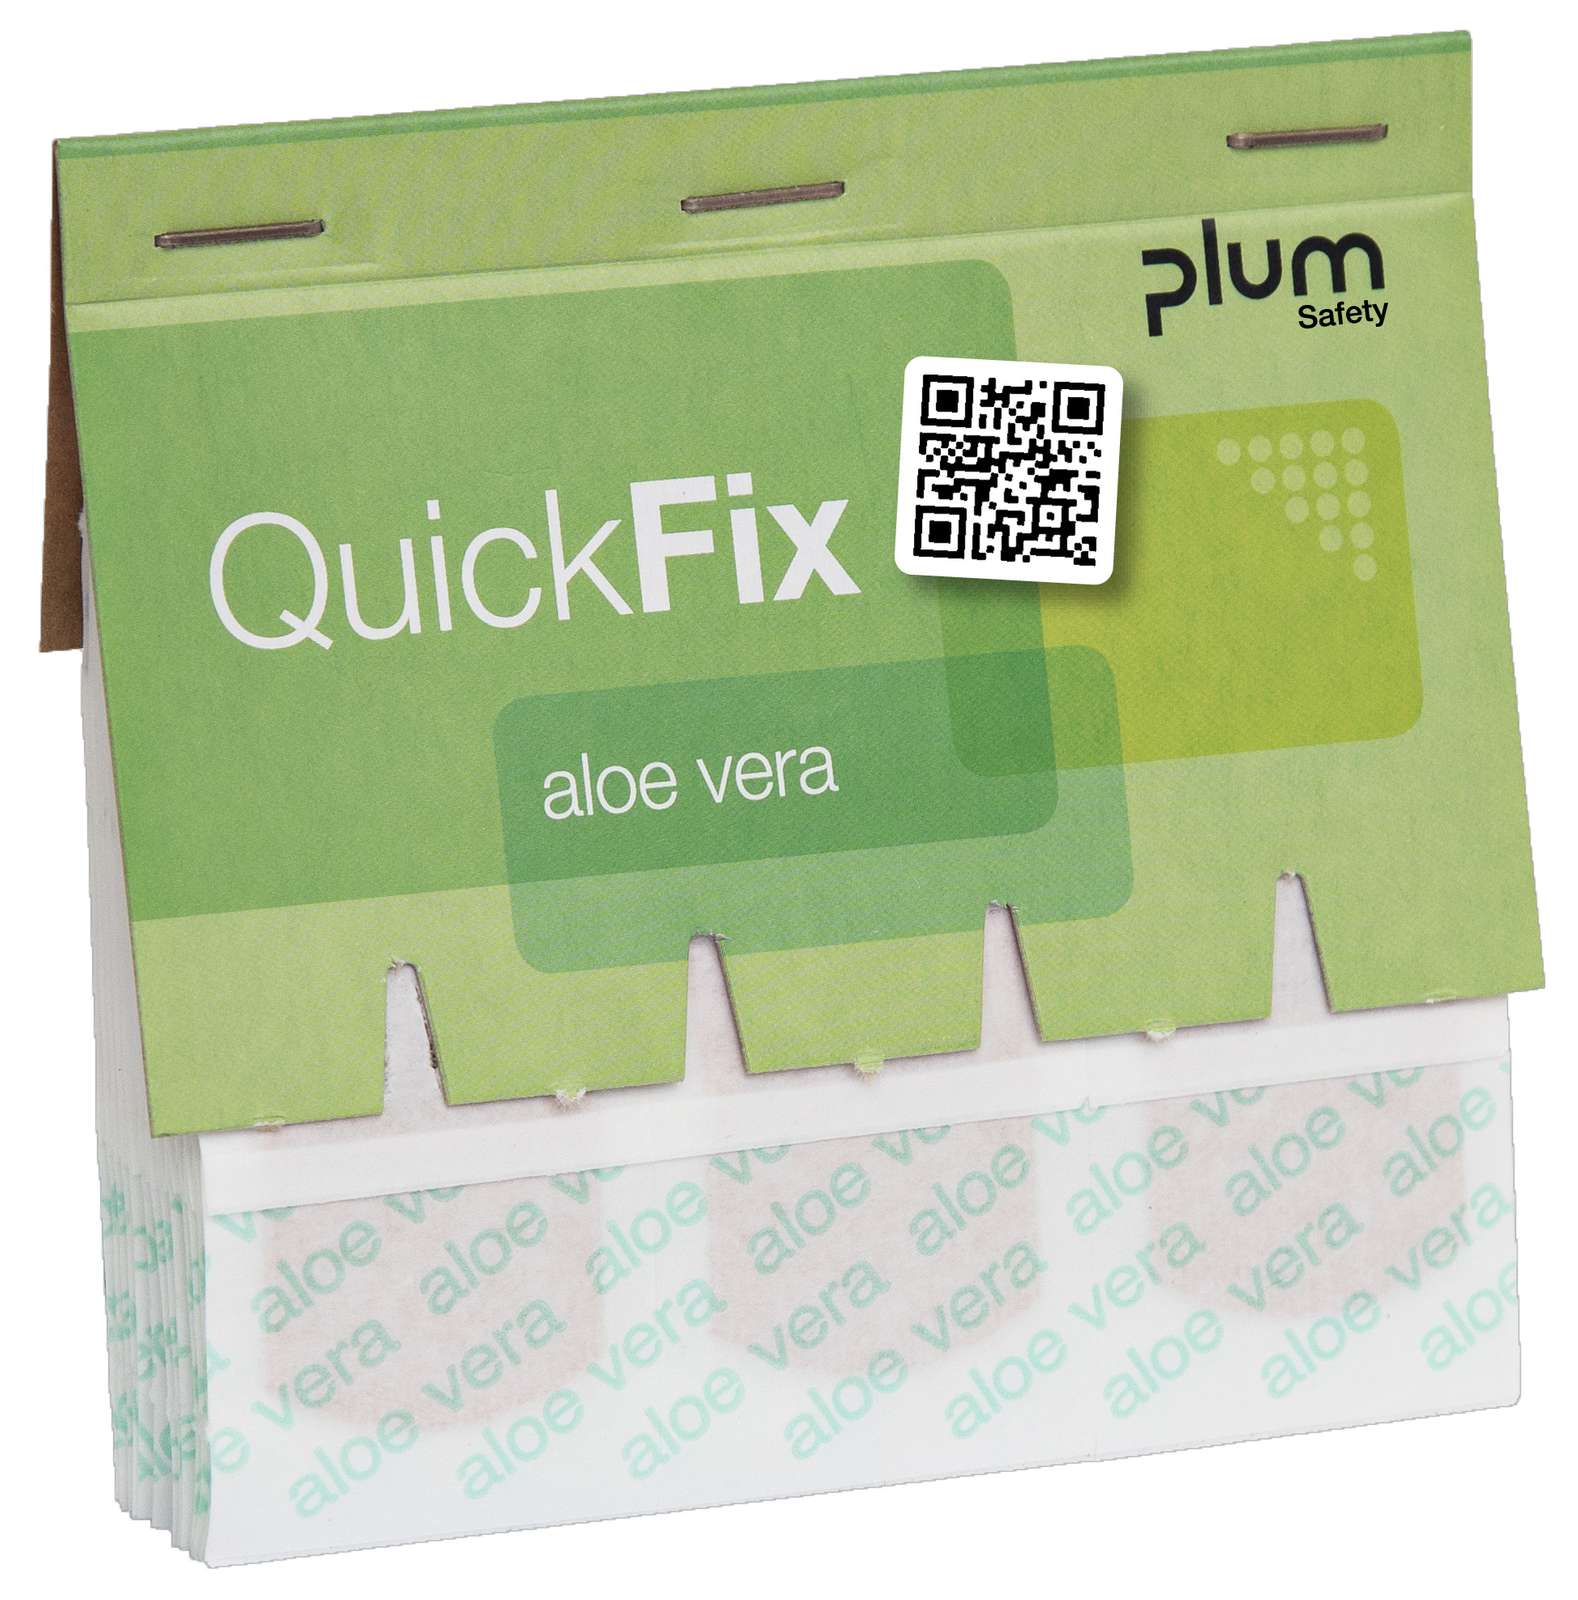 5514 Plum QuickFix Aloe Vera Open 20231124